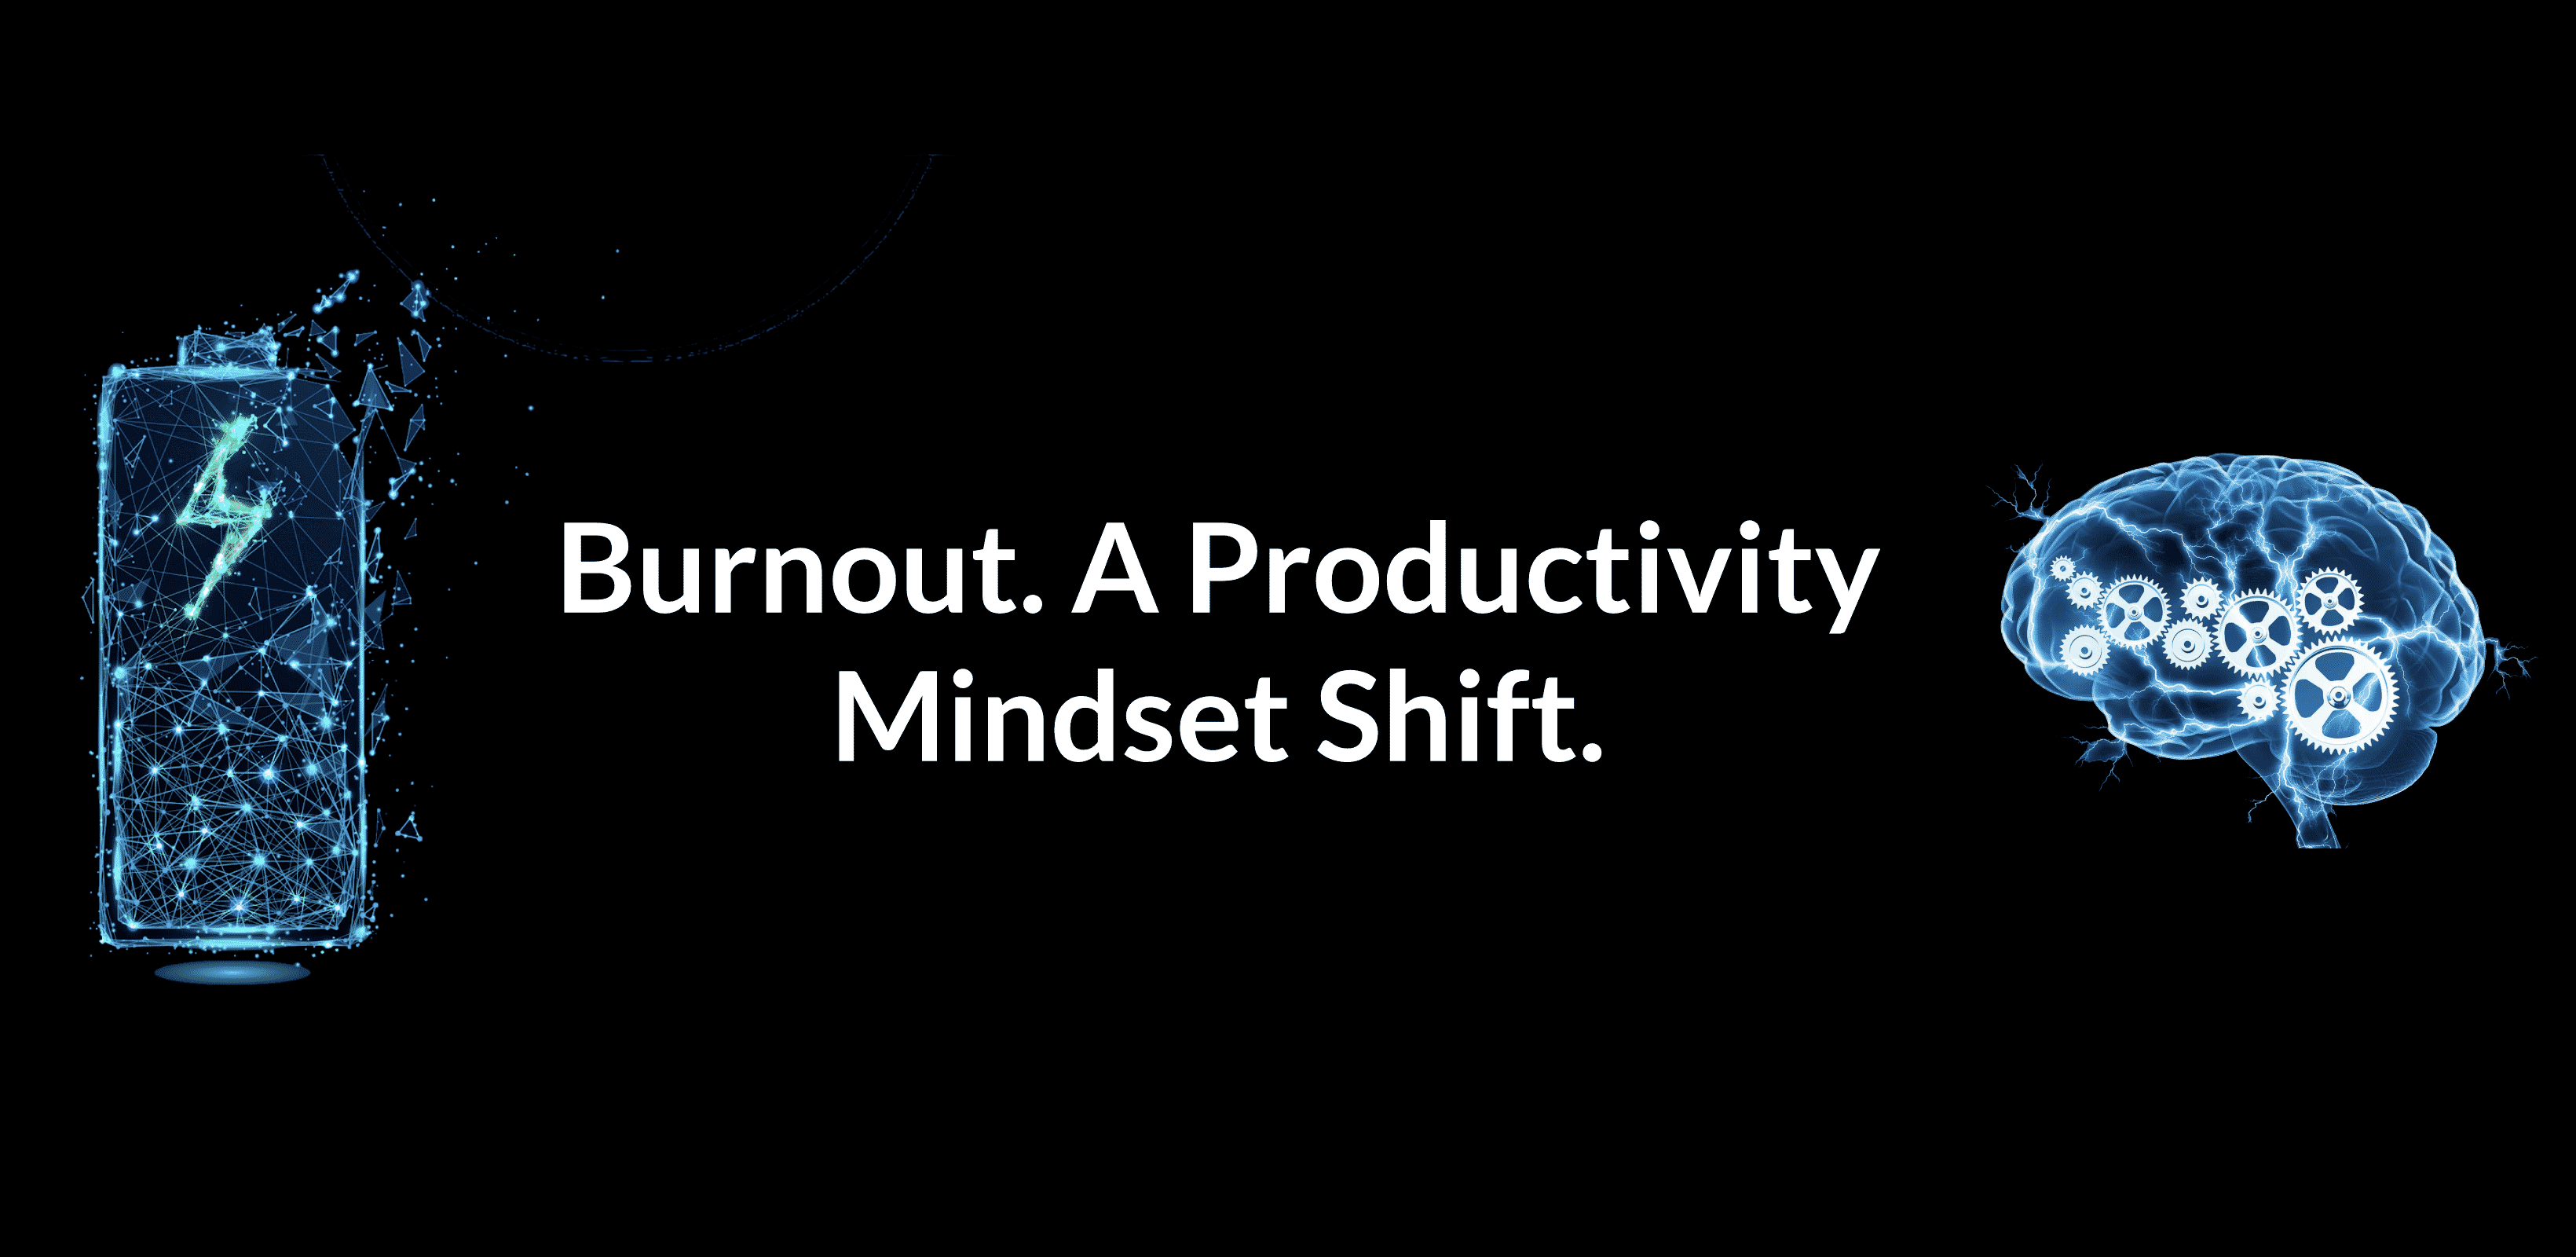 Burnout. A Productivity Mindset Shift.